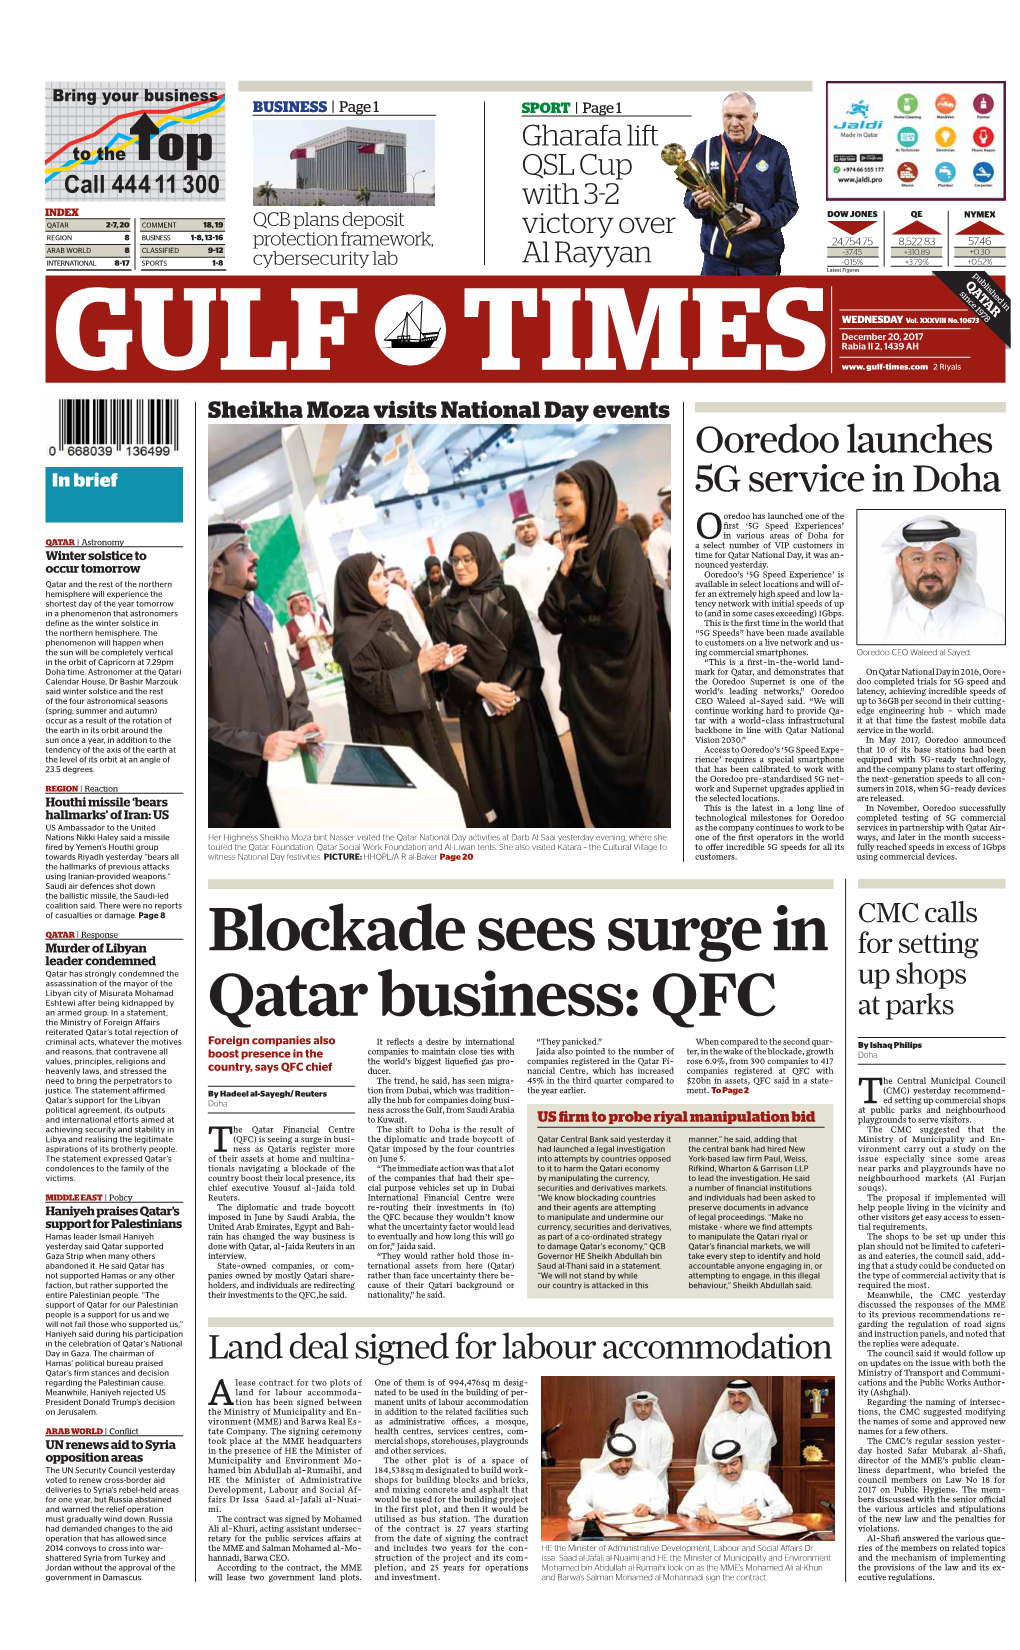 Blockade Sees Surge in Qatar Business